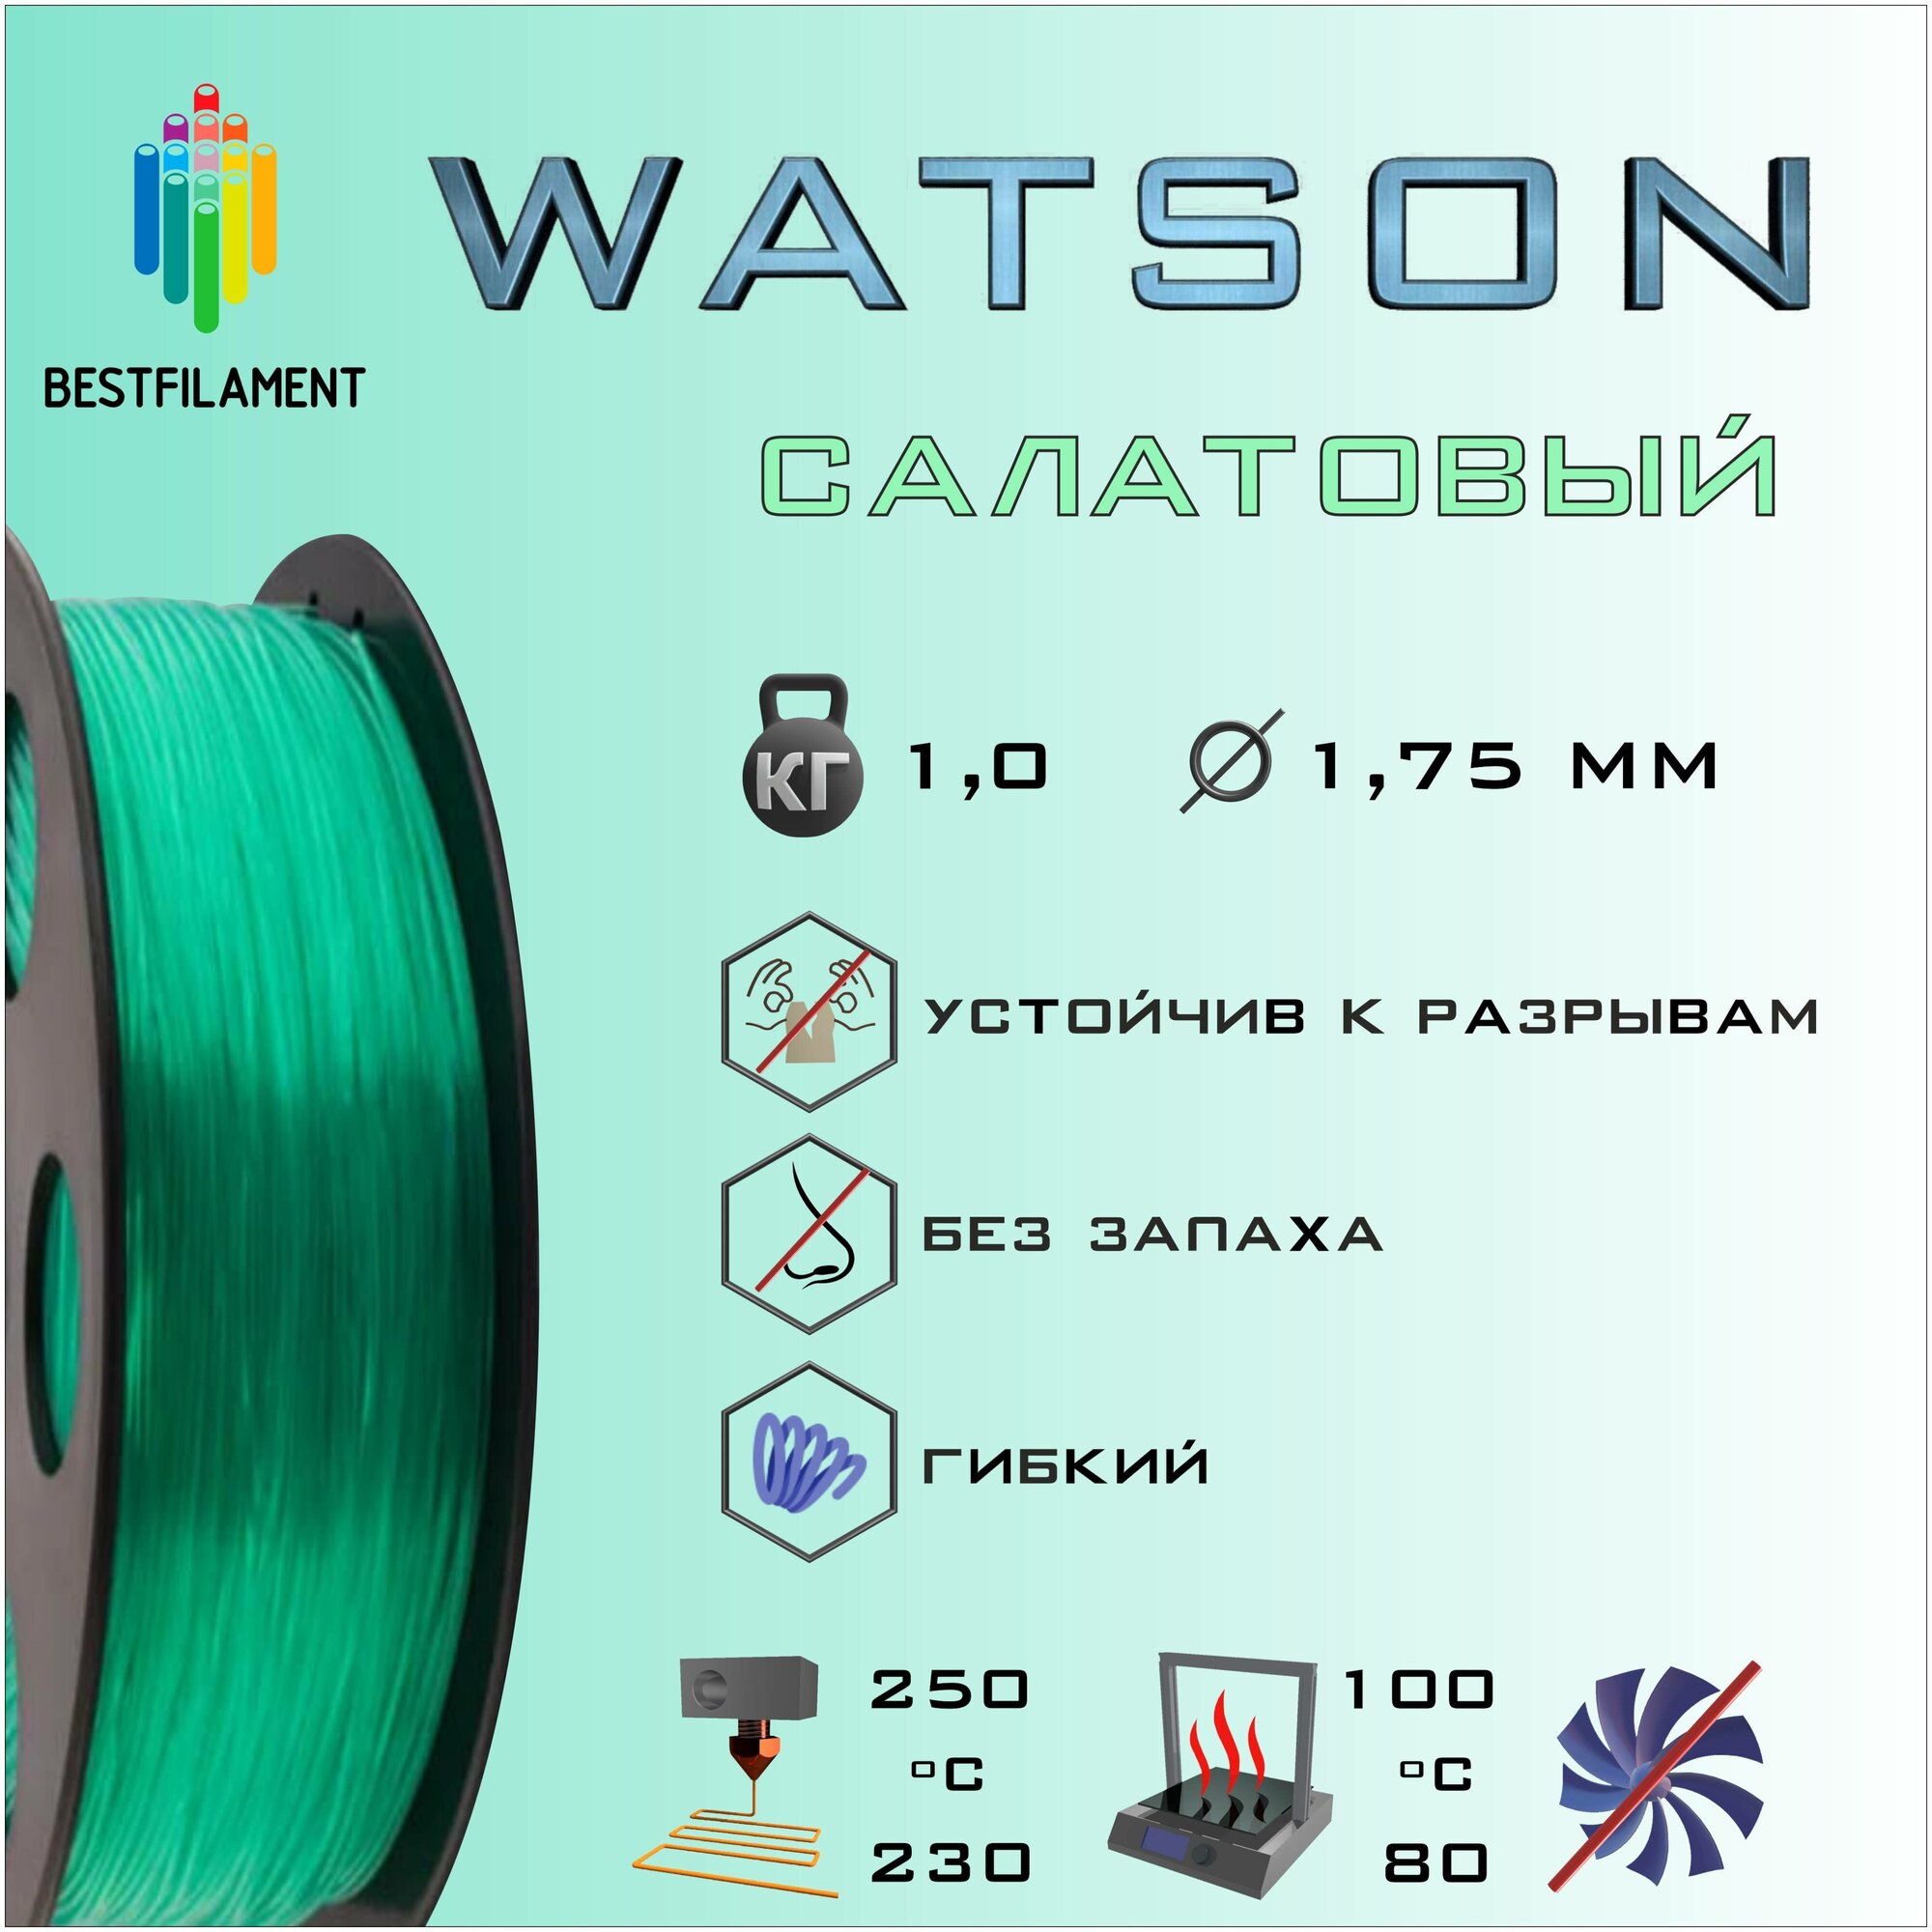 SBS Watson Салатовый 1000 гр. 1.75 мм пластик Bestfilament для 3D-принтера